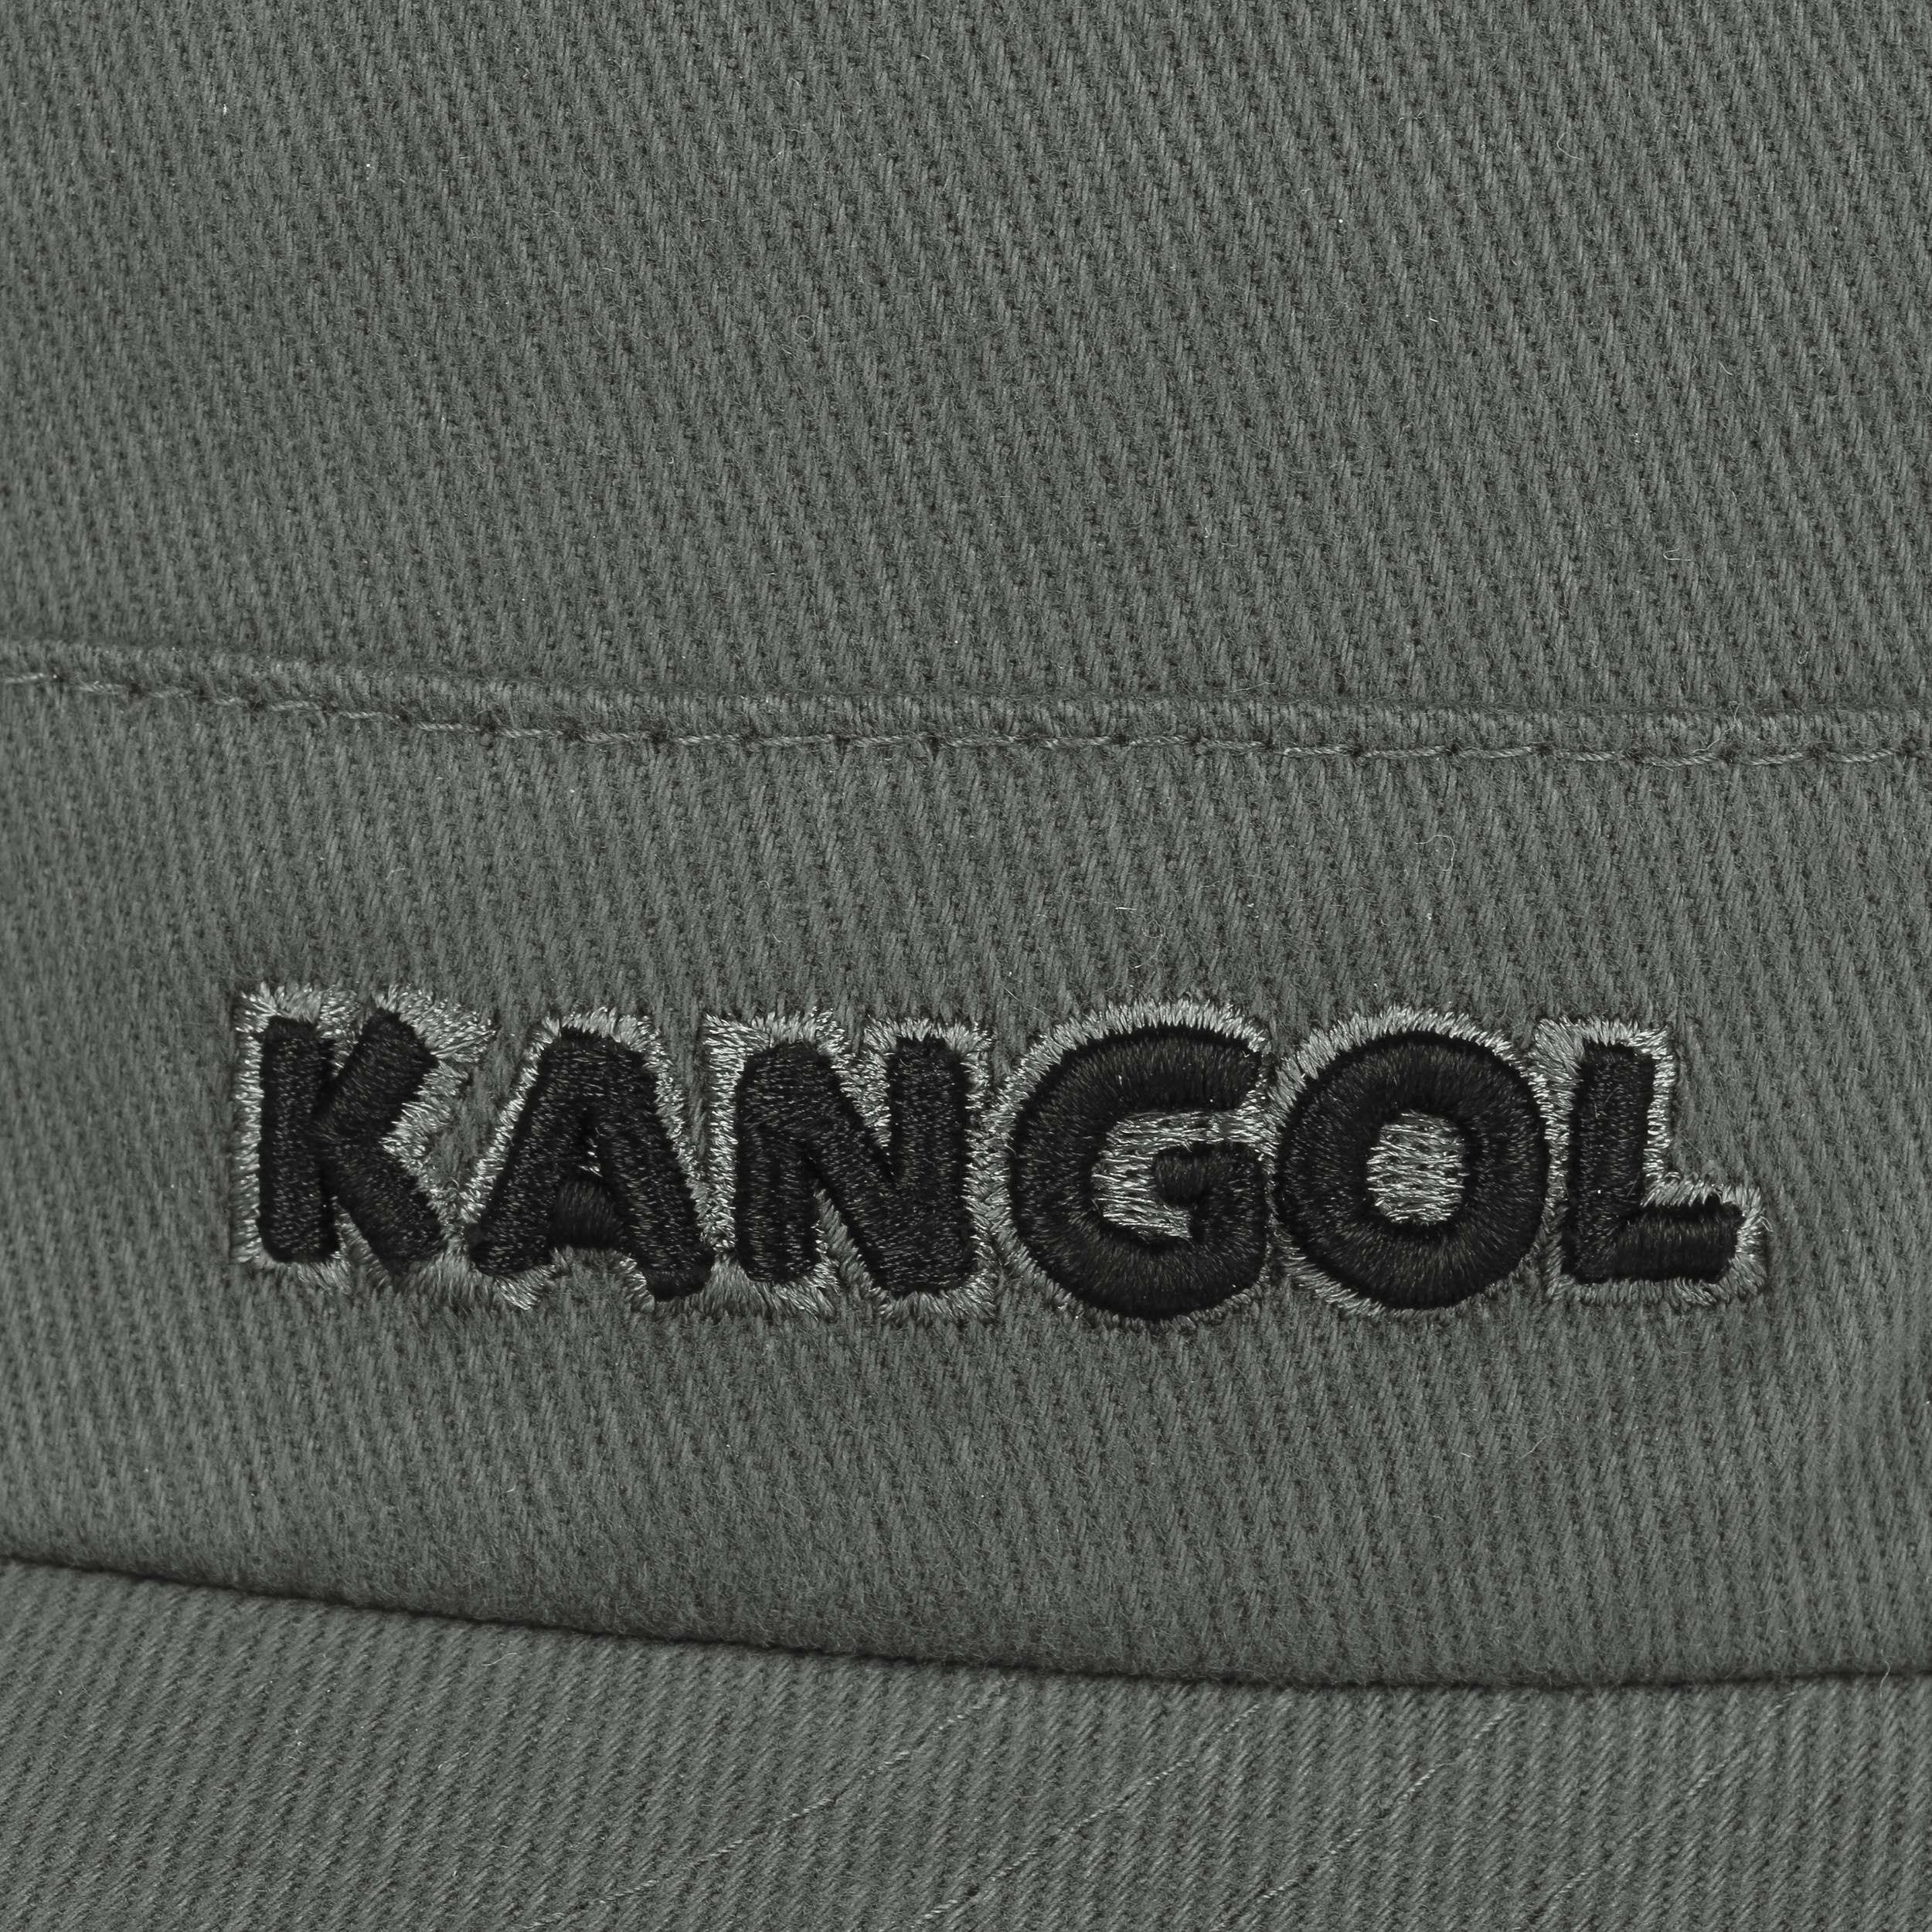 Kangol Flexfit Urban Army Cap, GBP 41,95 --> Hats, caps & beanies shop ...